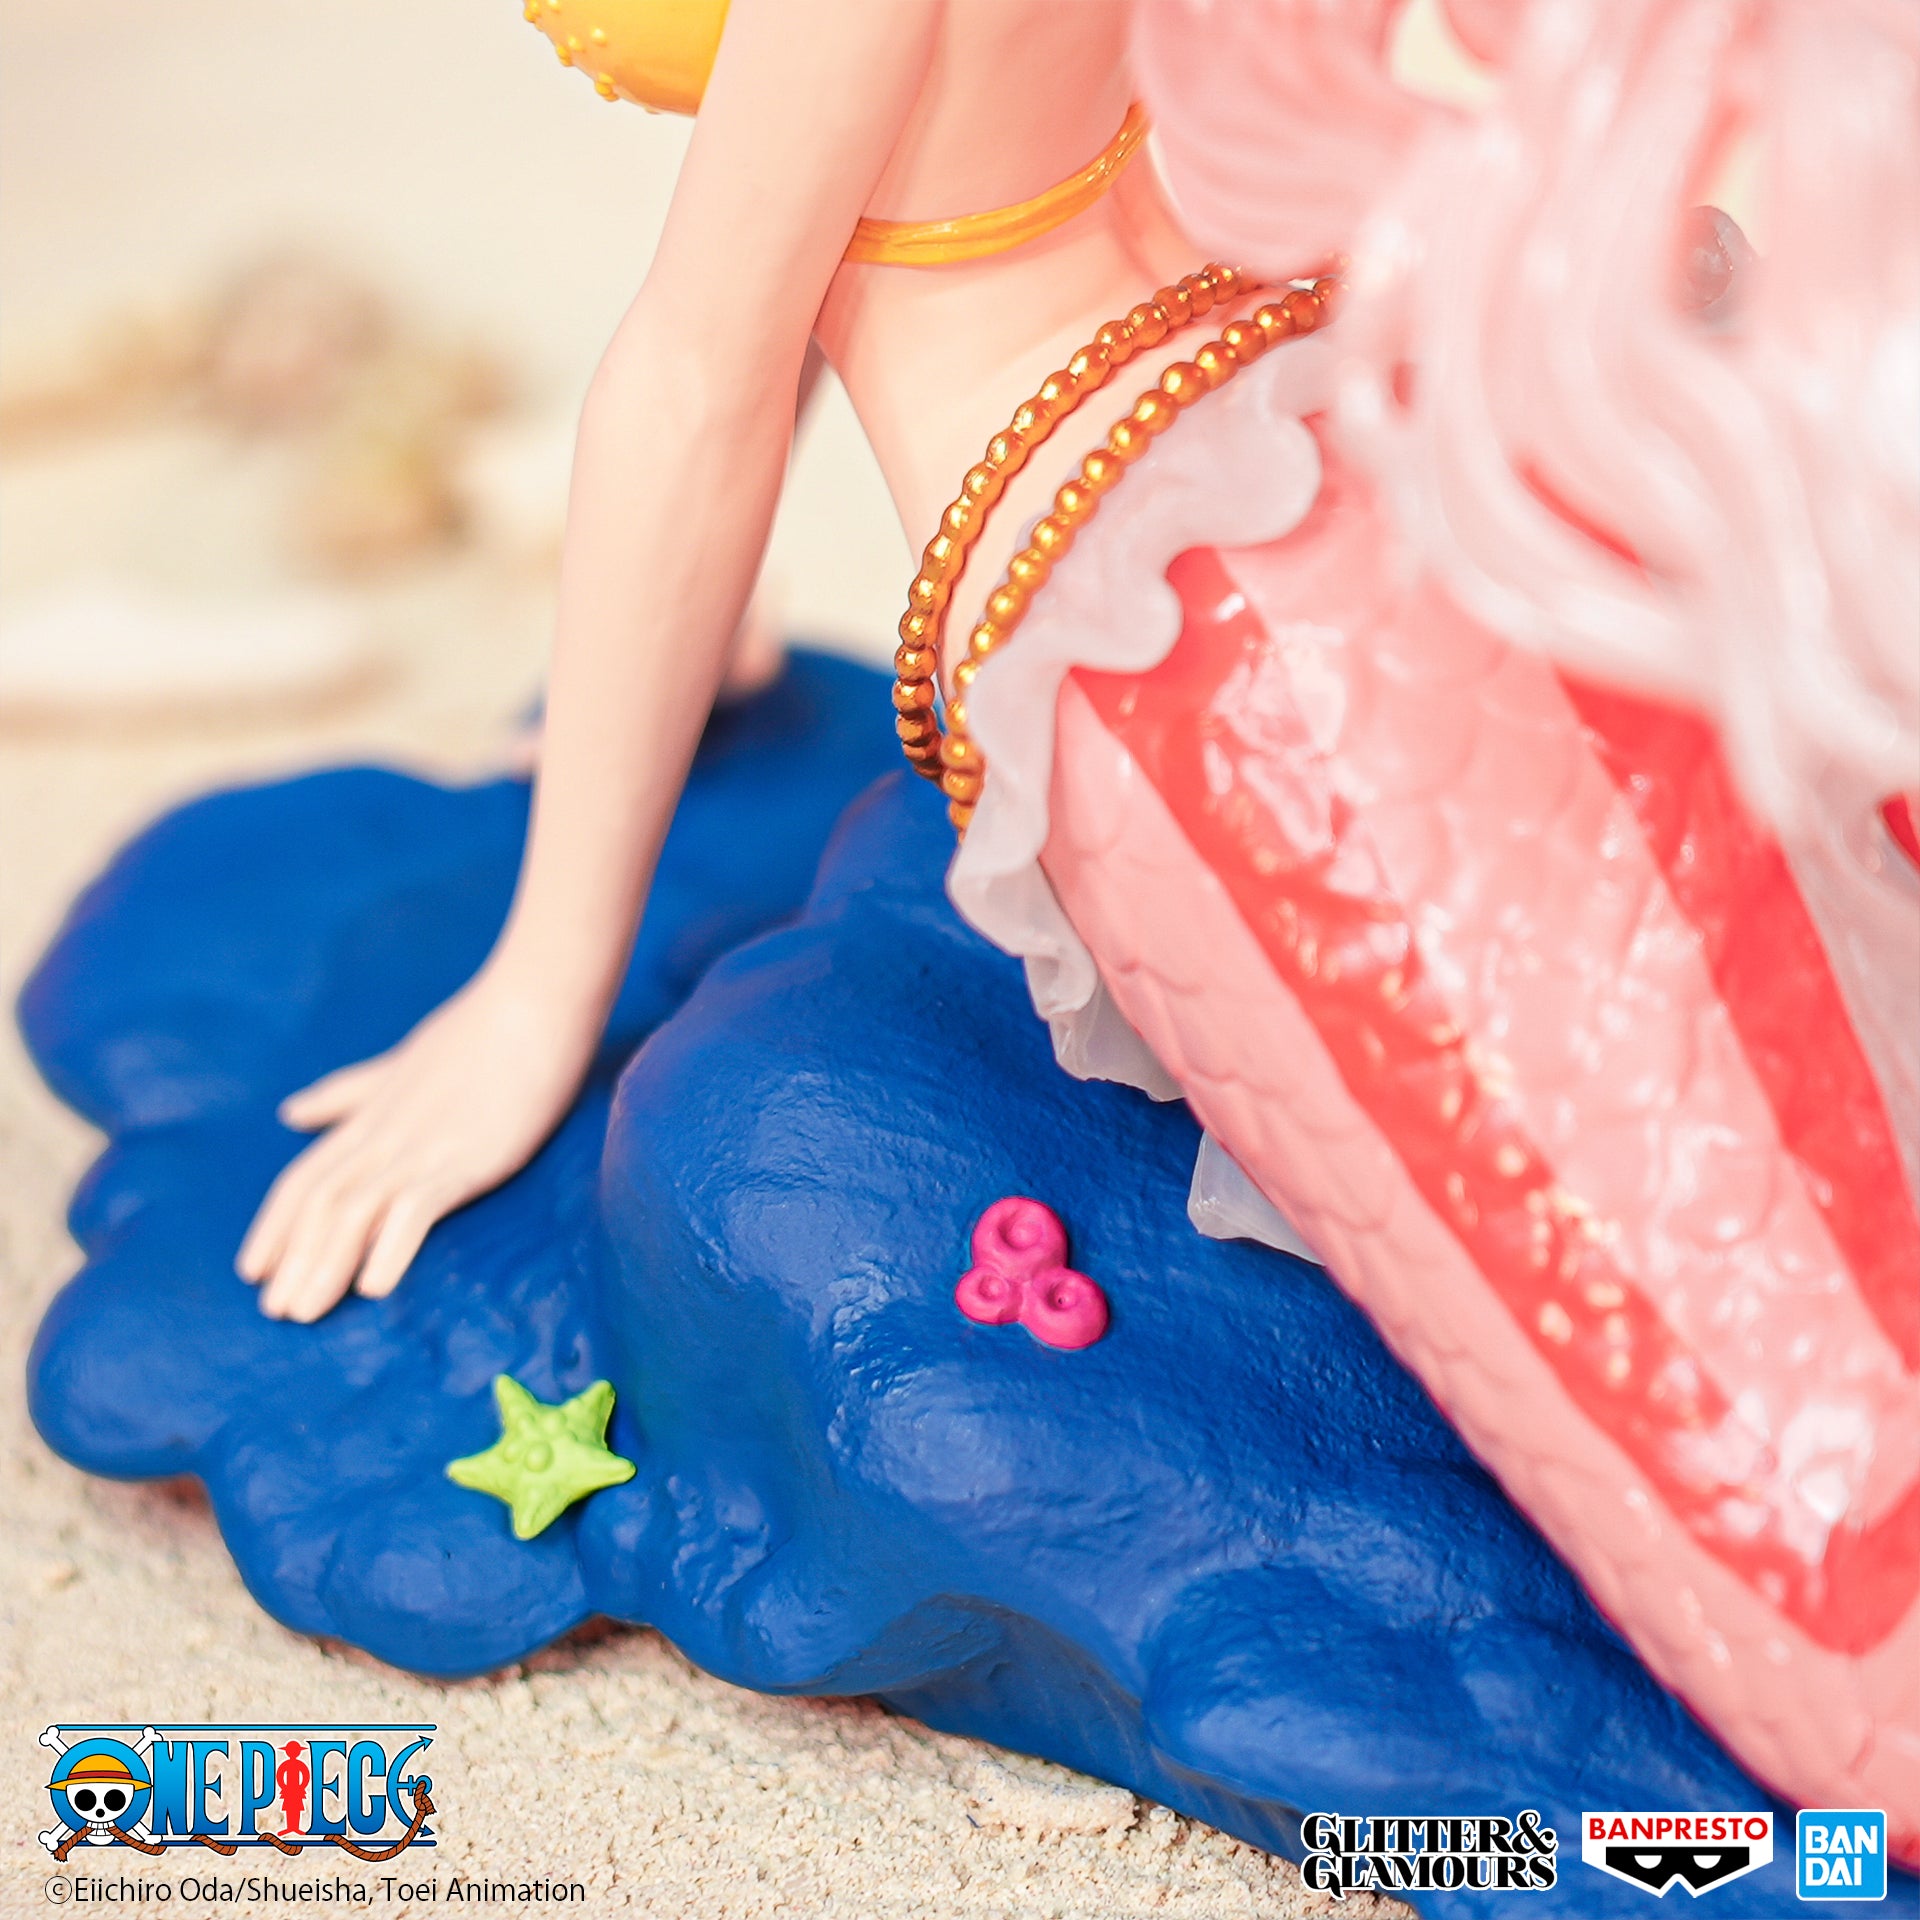 Banpresto Glitter & Glamours: One Piece - Princesa Shirahoshi Special Color